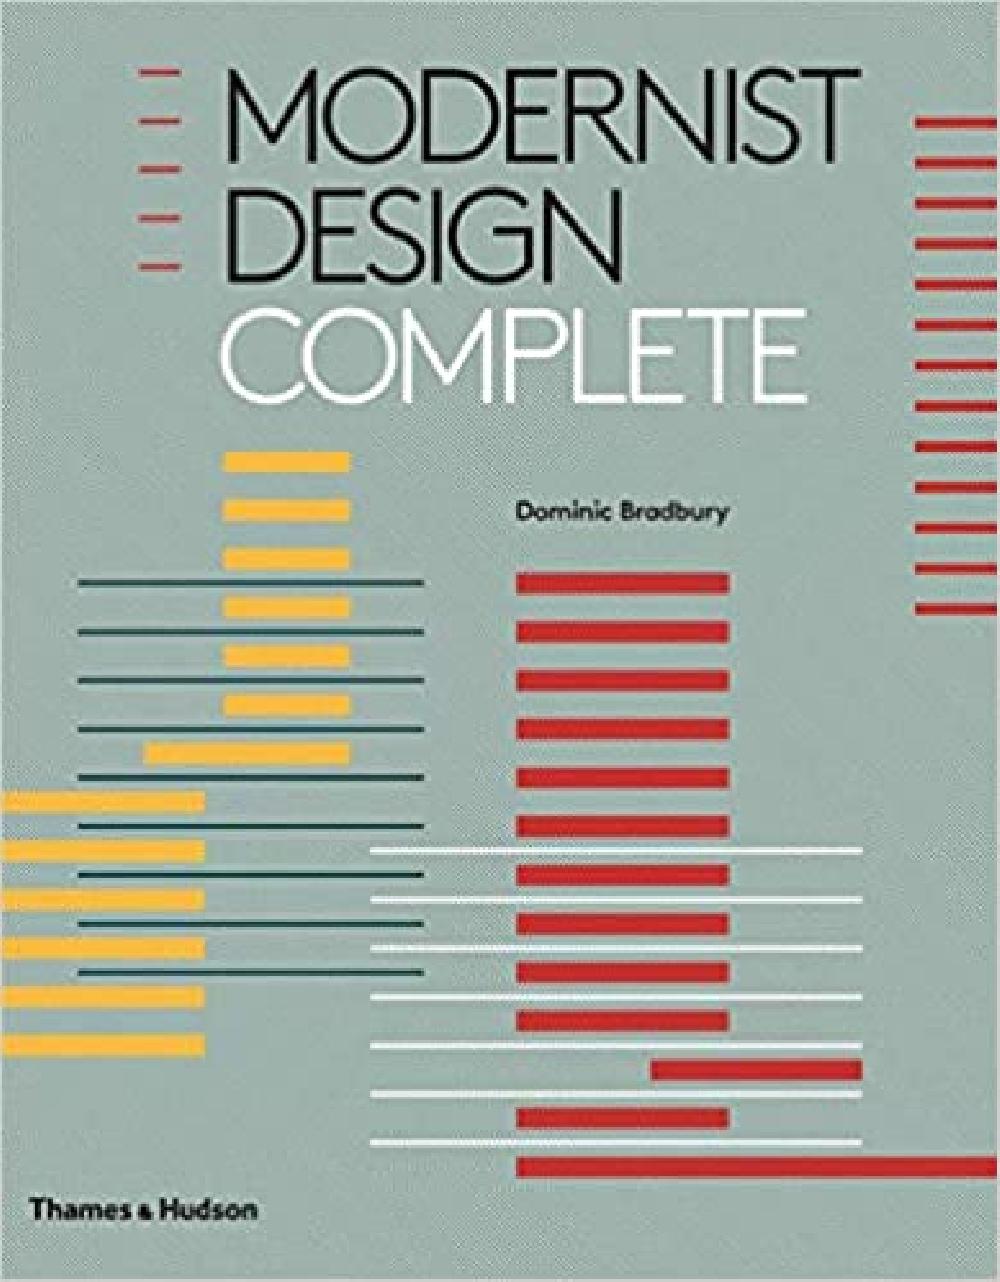 Modernist design complete - Dominic Bradburry